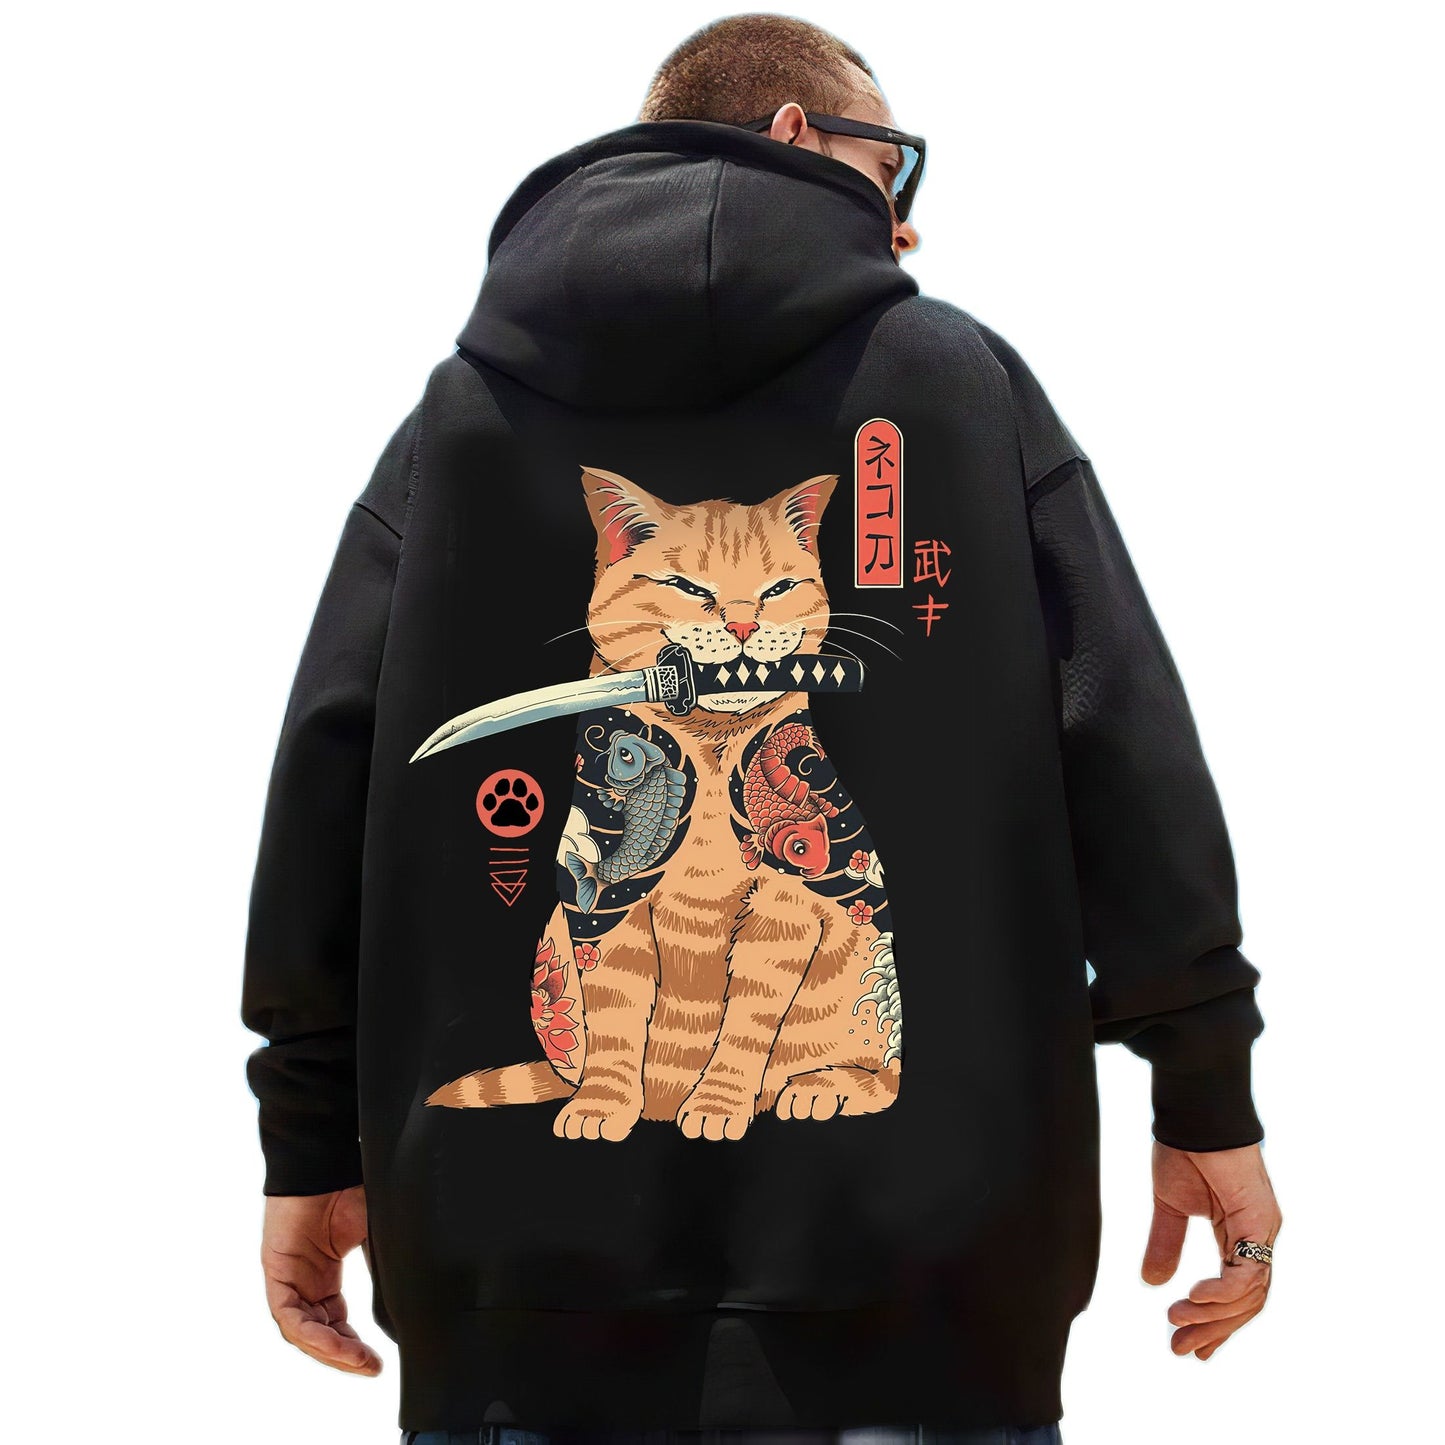 Samurai Cat and Other Animals Hooded Sweatshirts Japanese Irezumi Style Hoodies